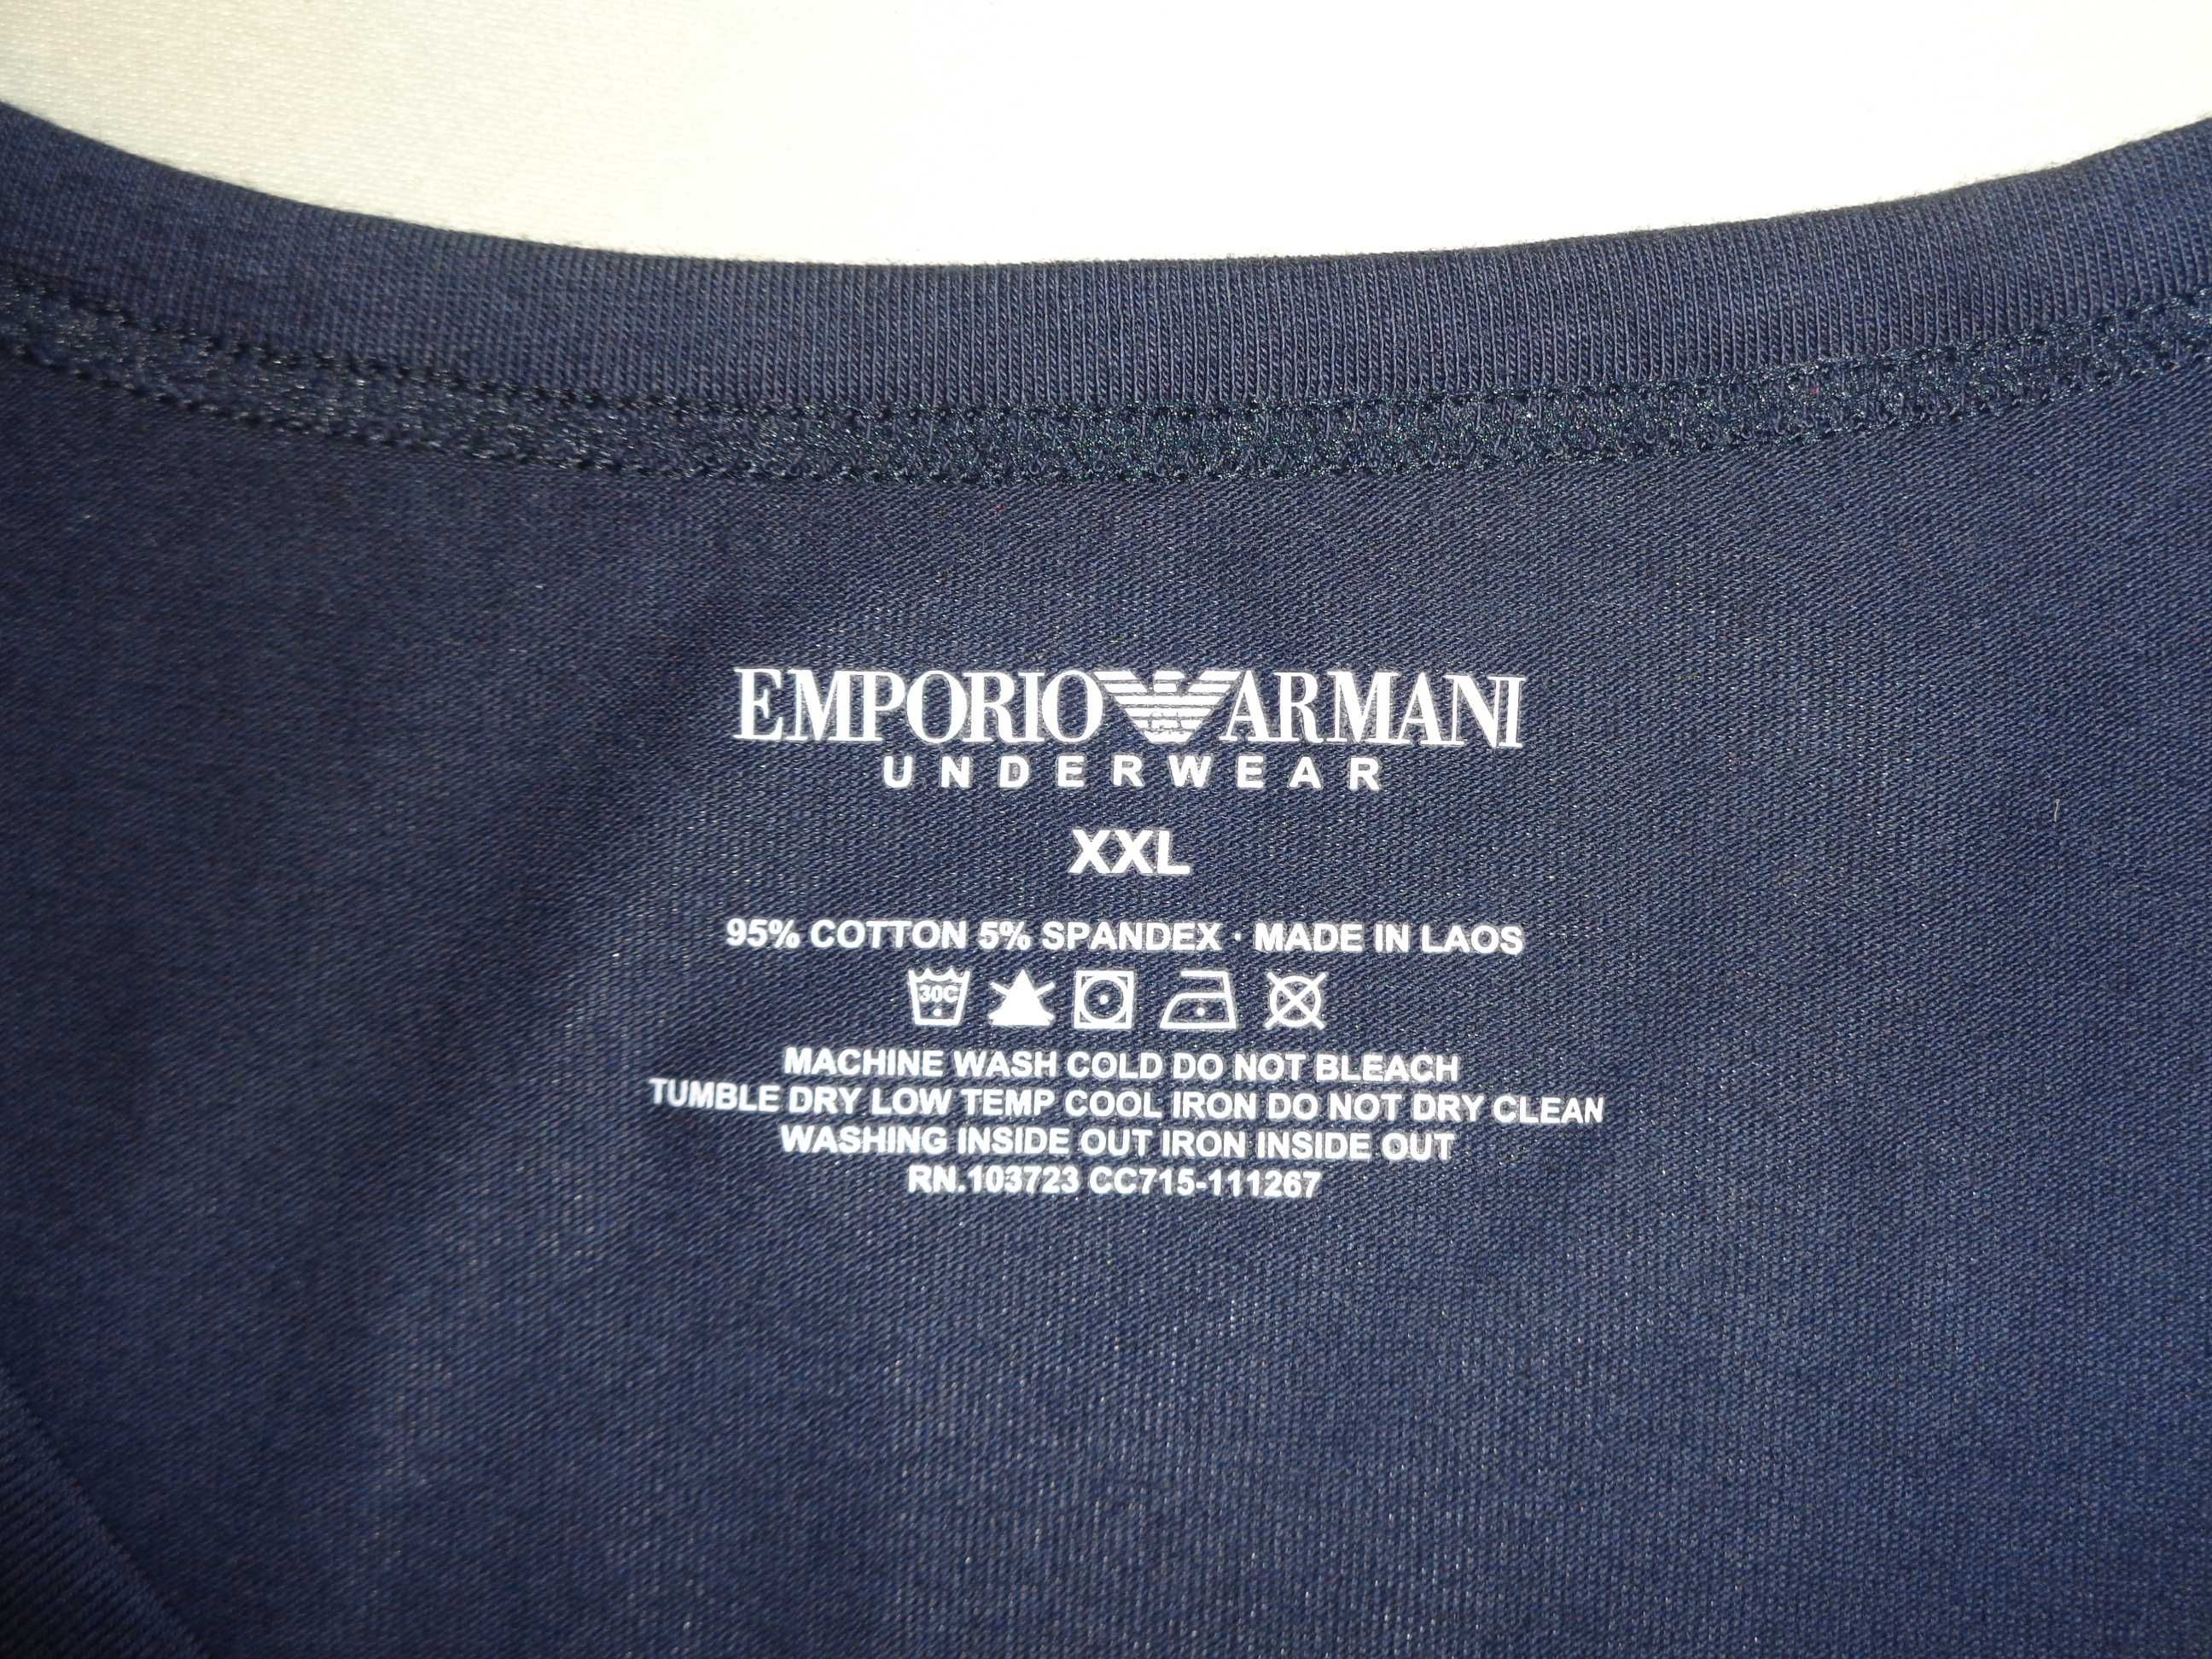 EMPORIO ARMANI Underwear NOWA navy granatowa koszulka tshirt slim XXL